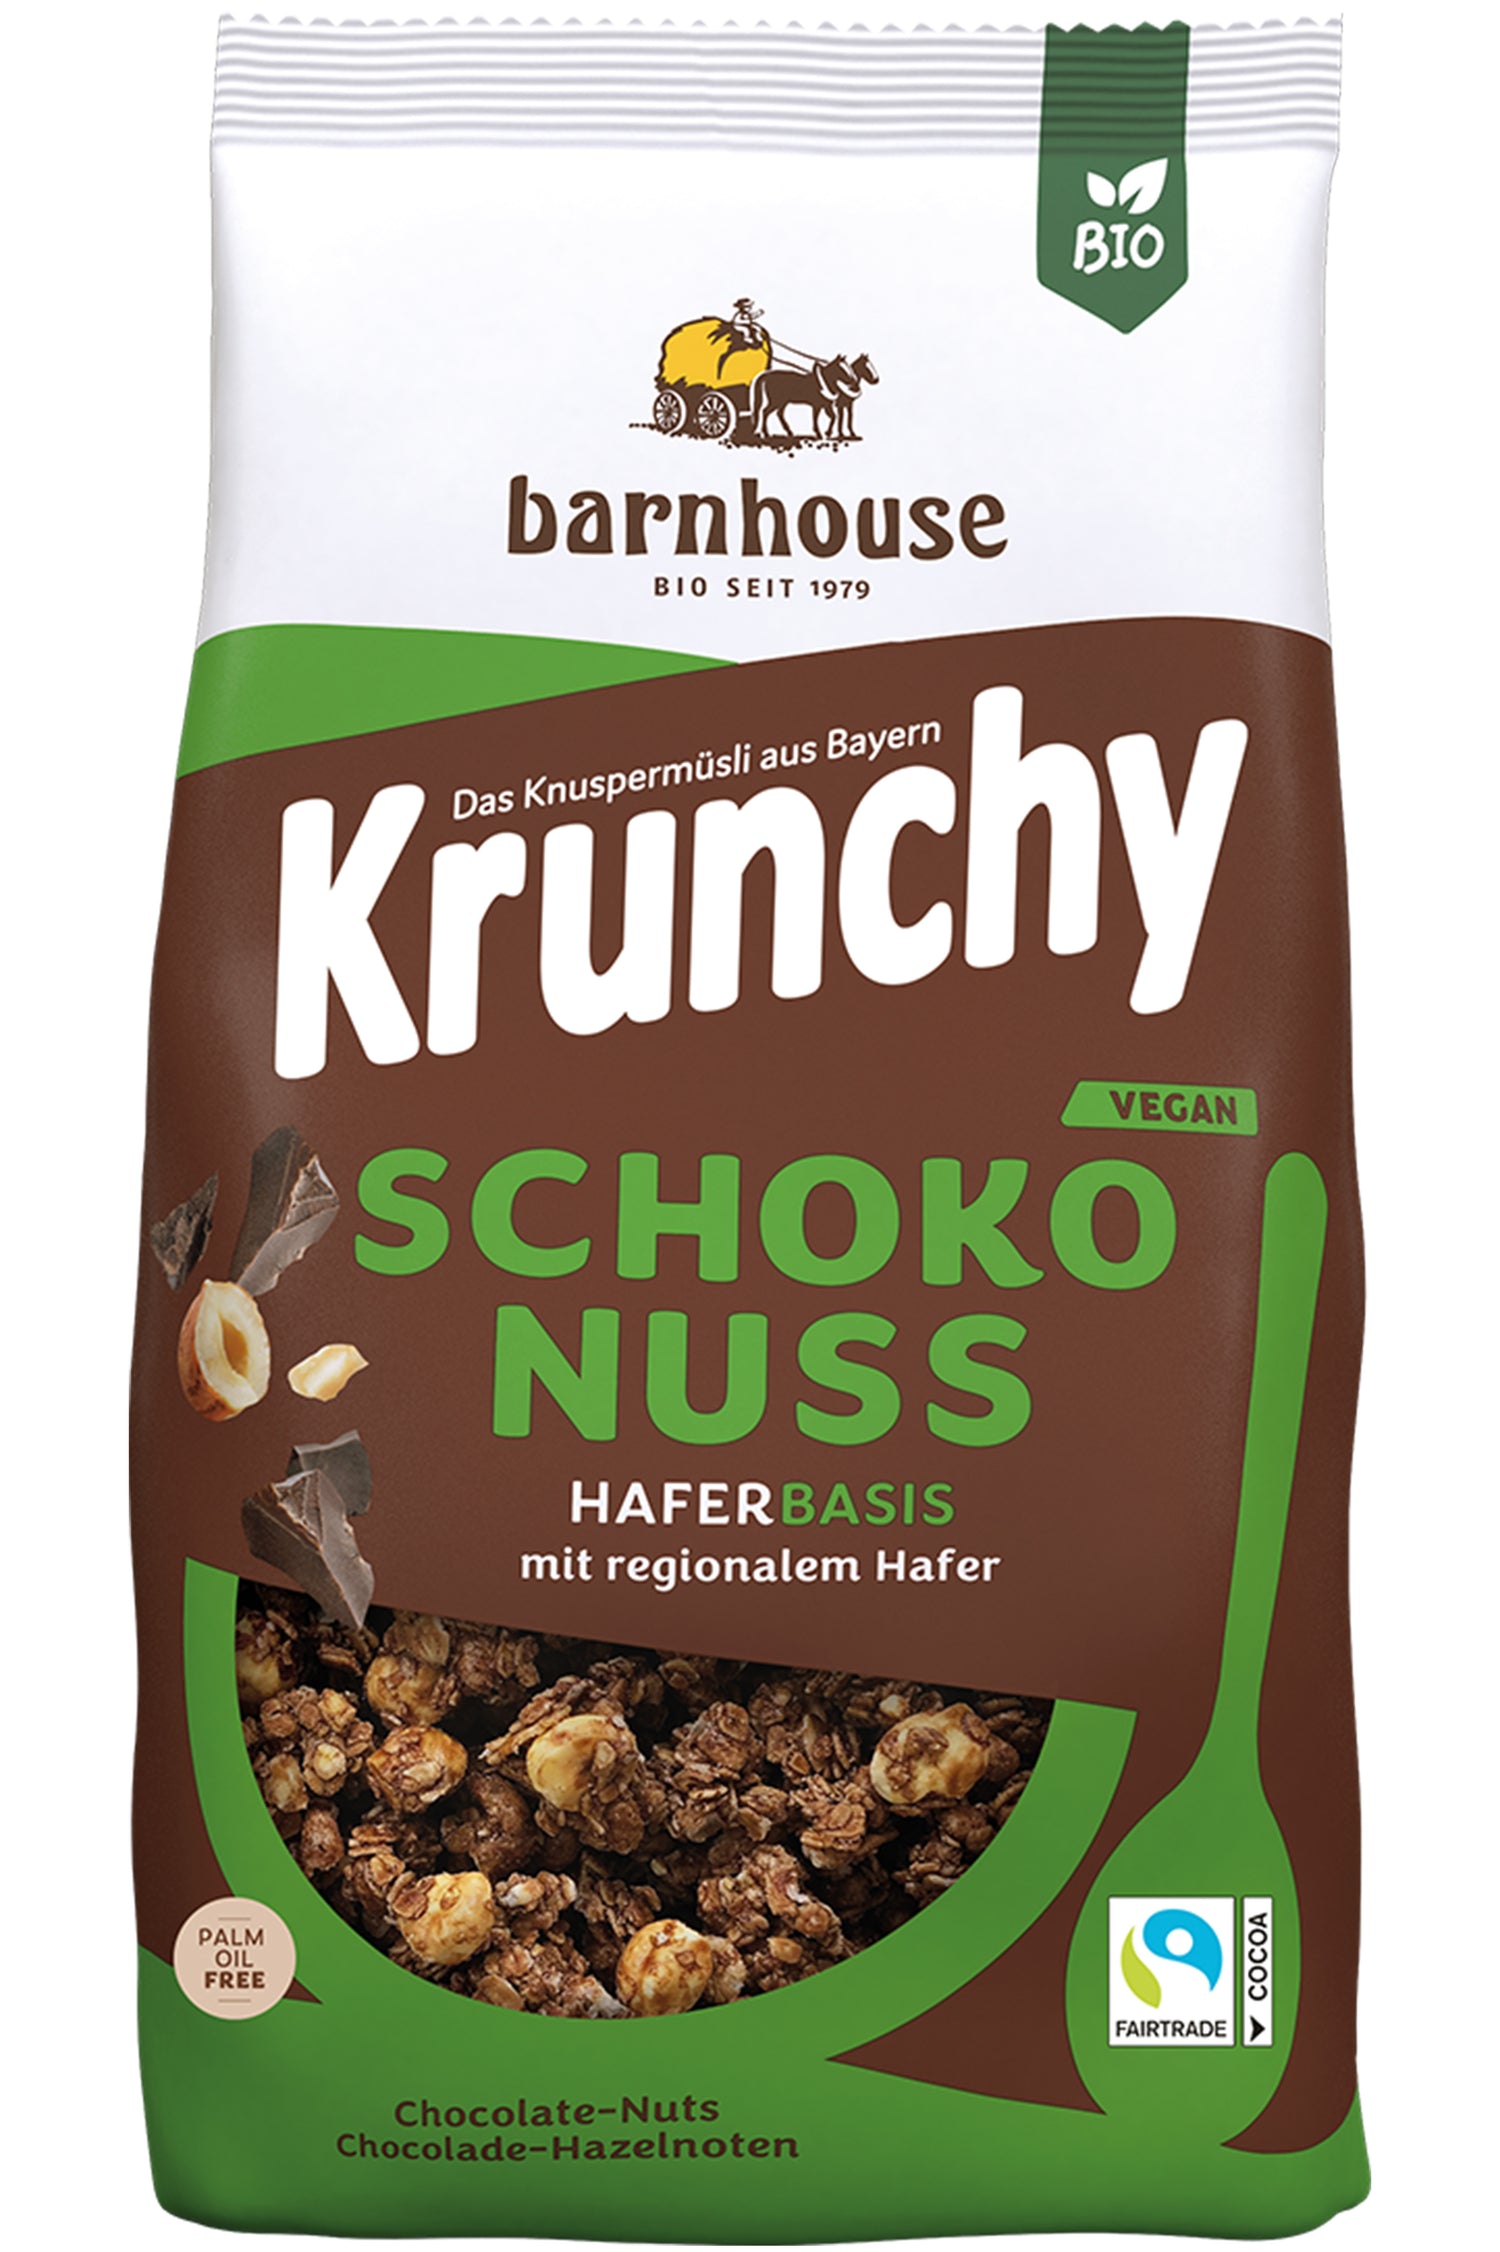 Krunchy Chocolate Nut